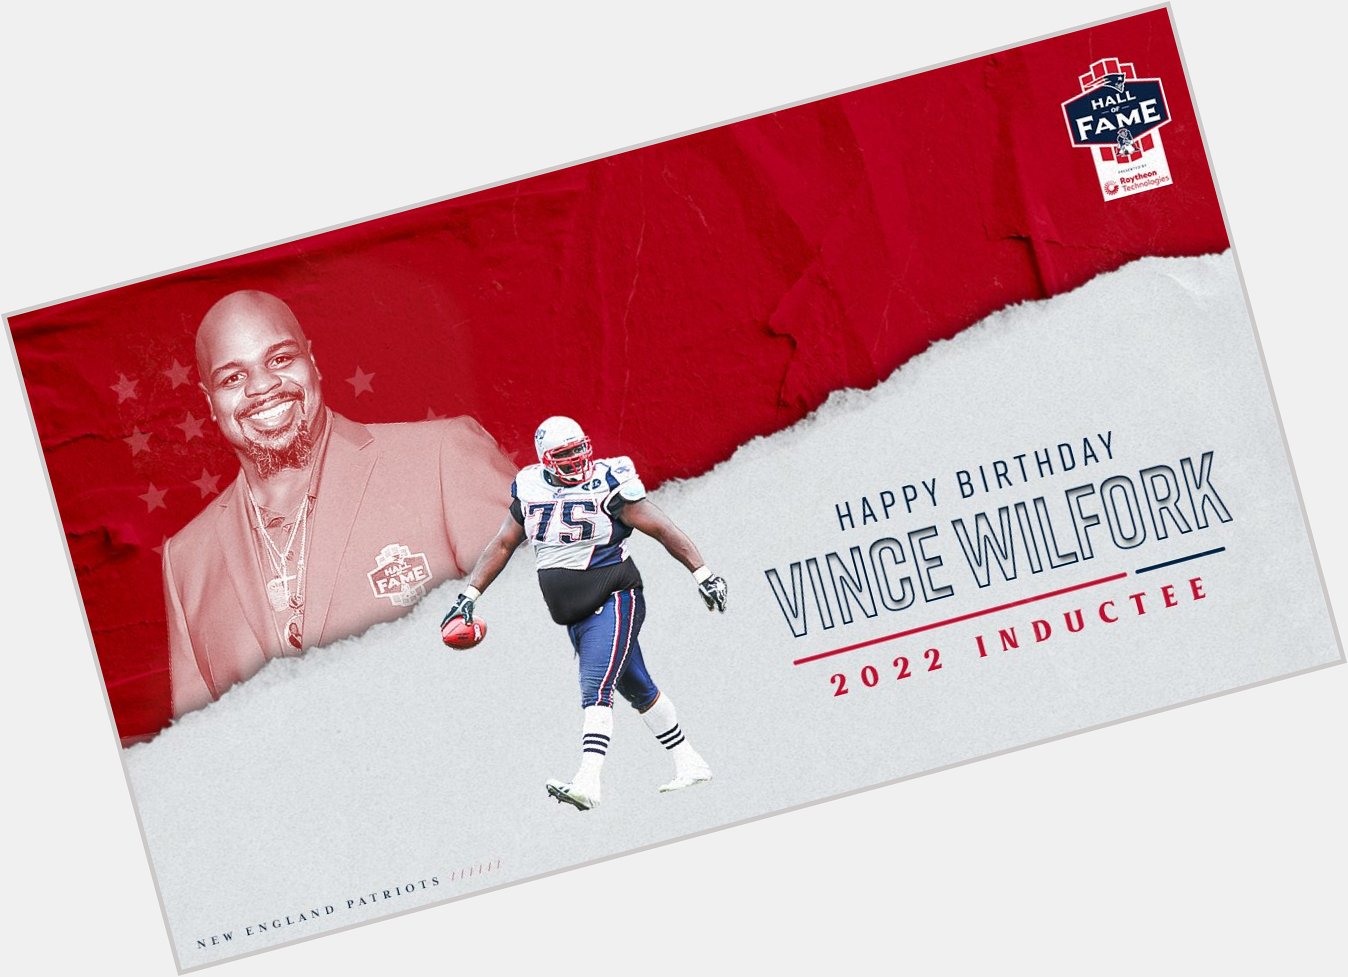 Happy Birthday Vince Wilfork! 